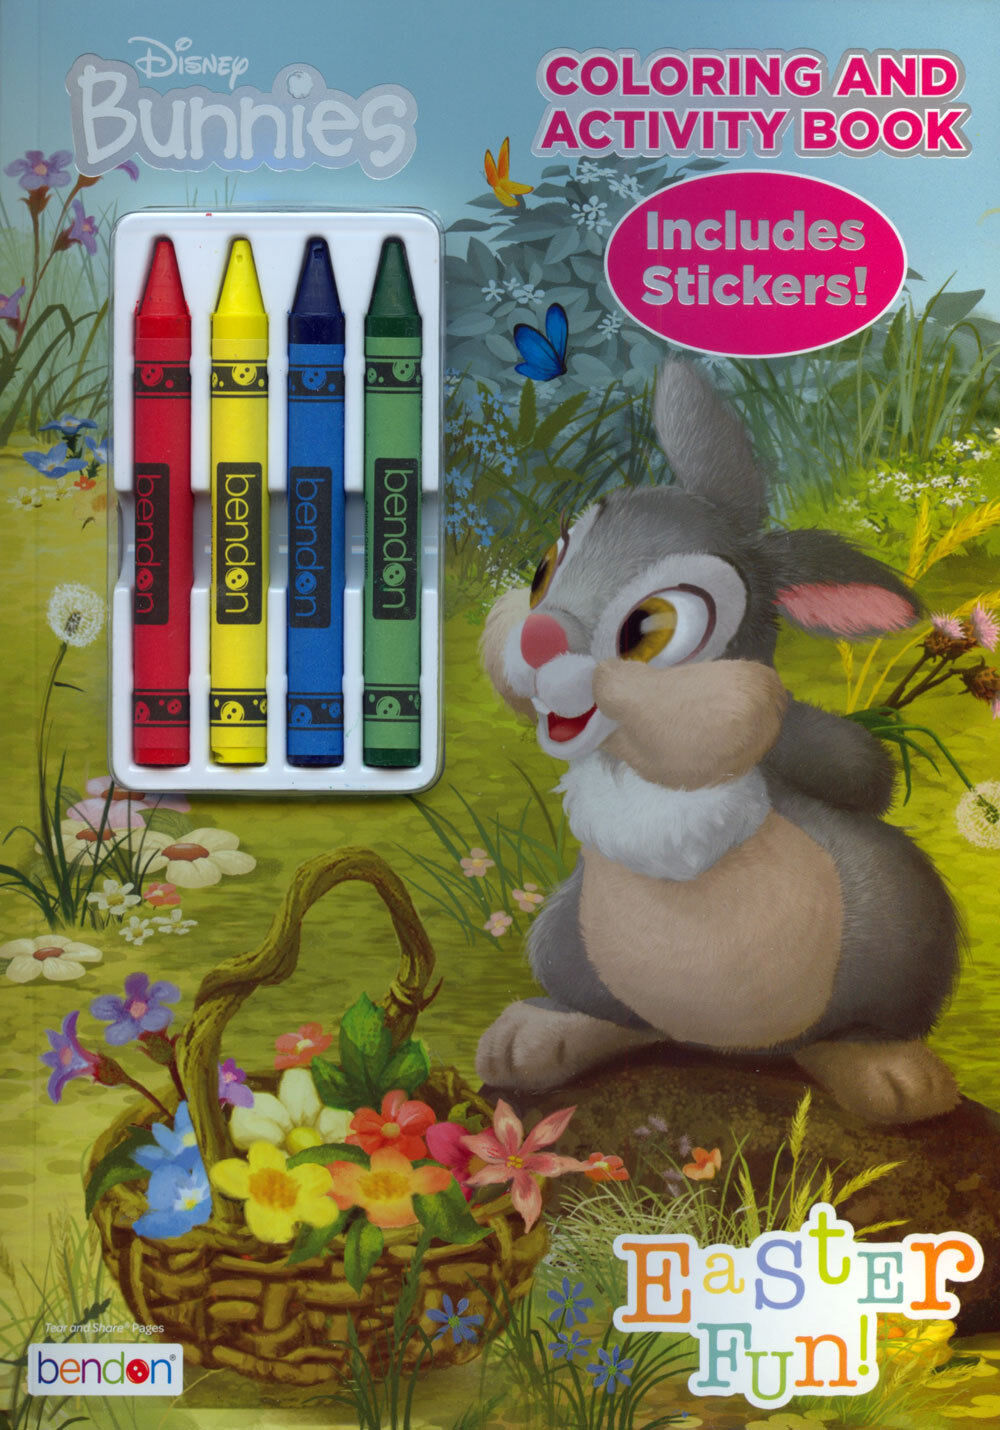 Disney Bunnies coloring book RARE UNUSED   eBay - Otakugadgets